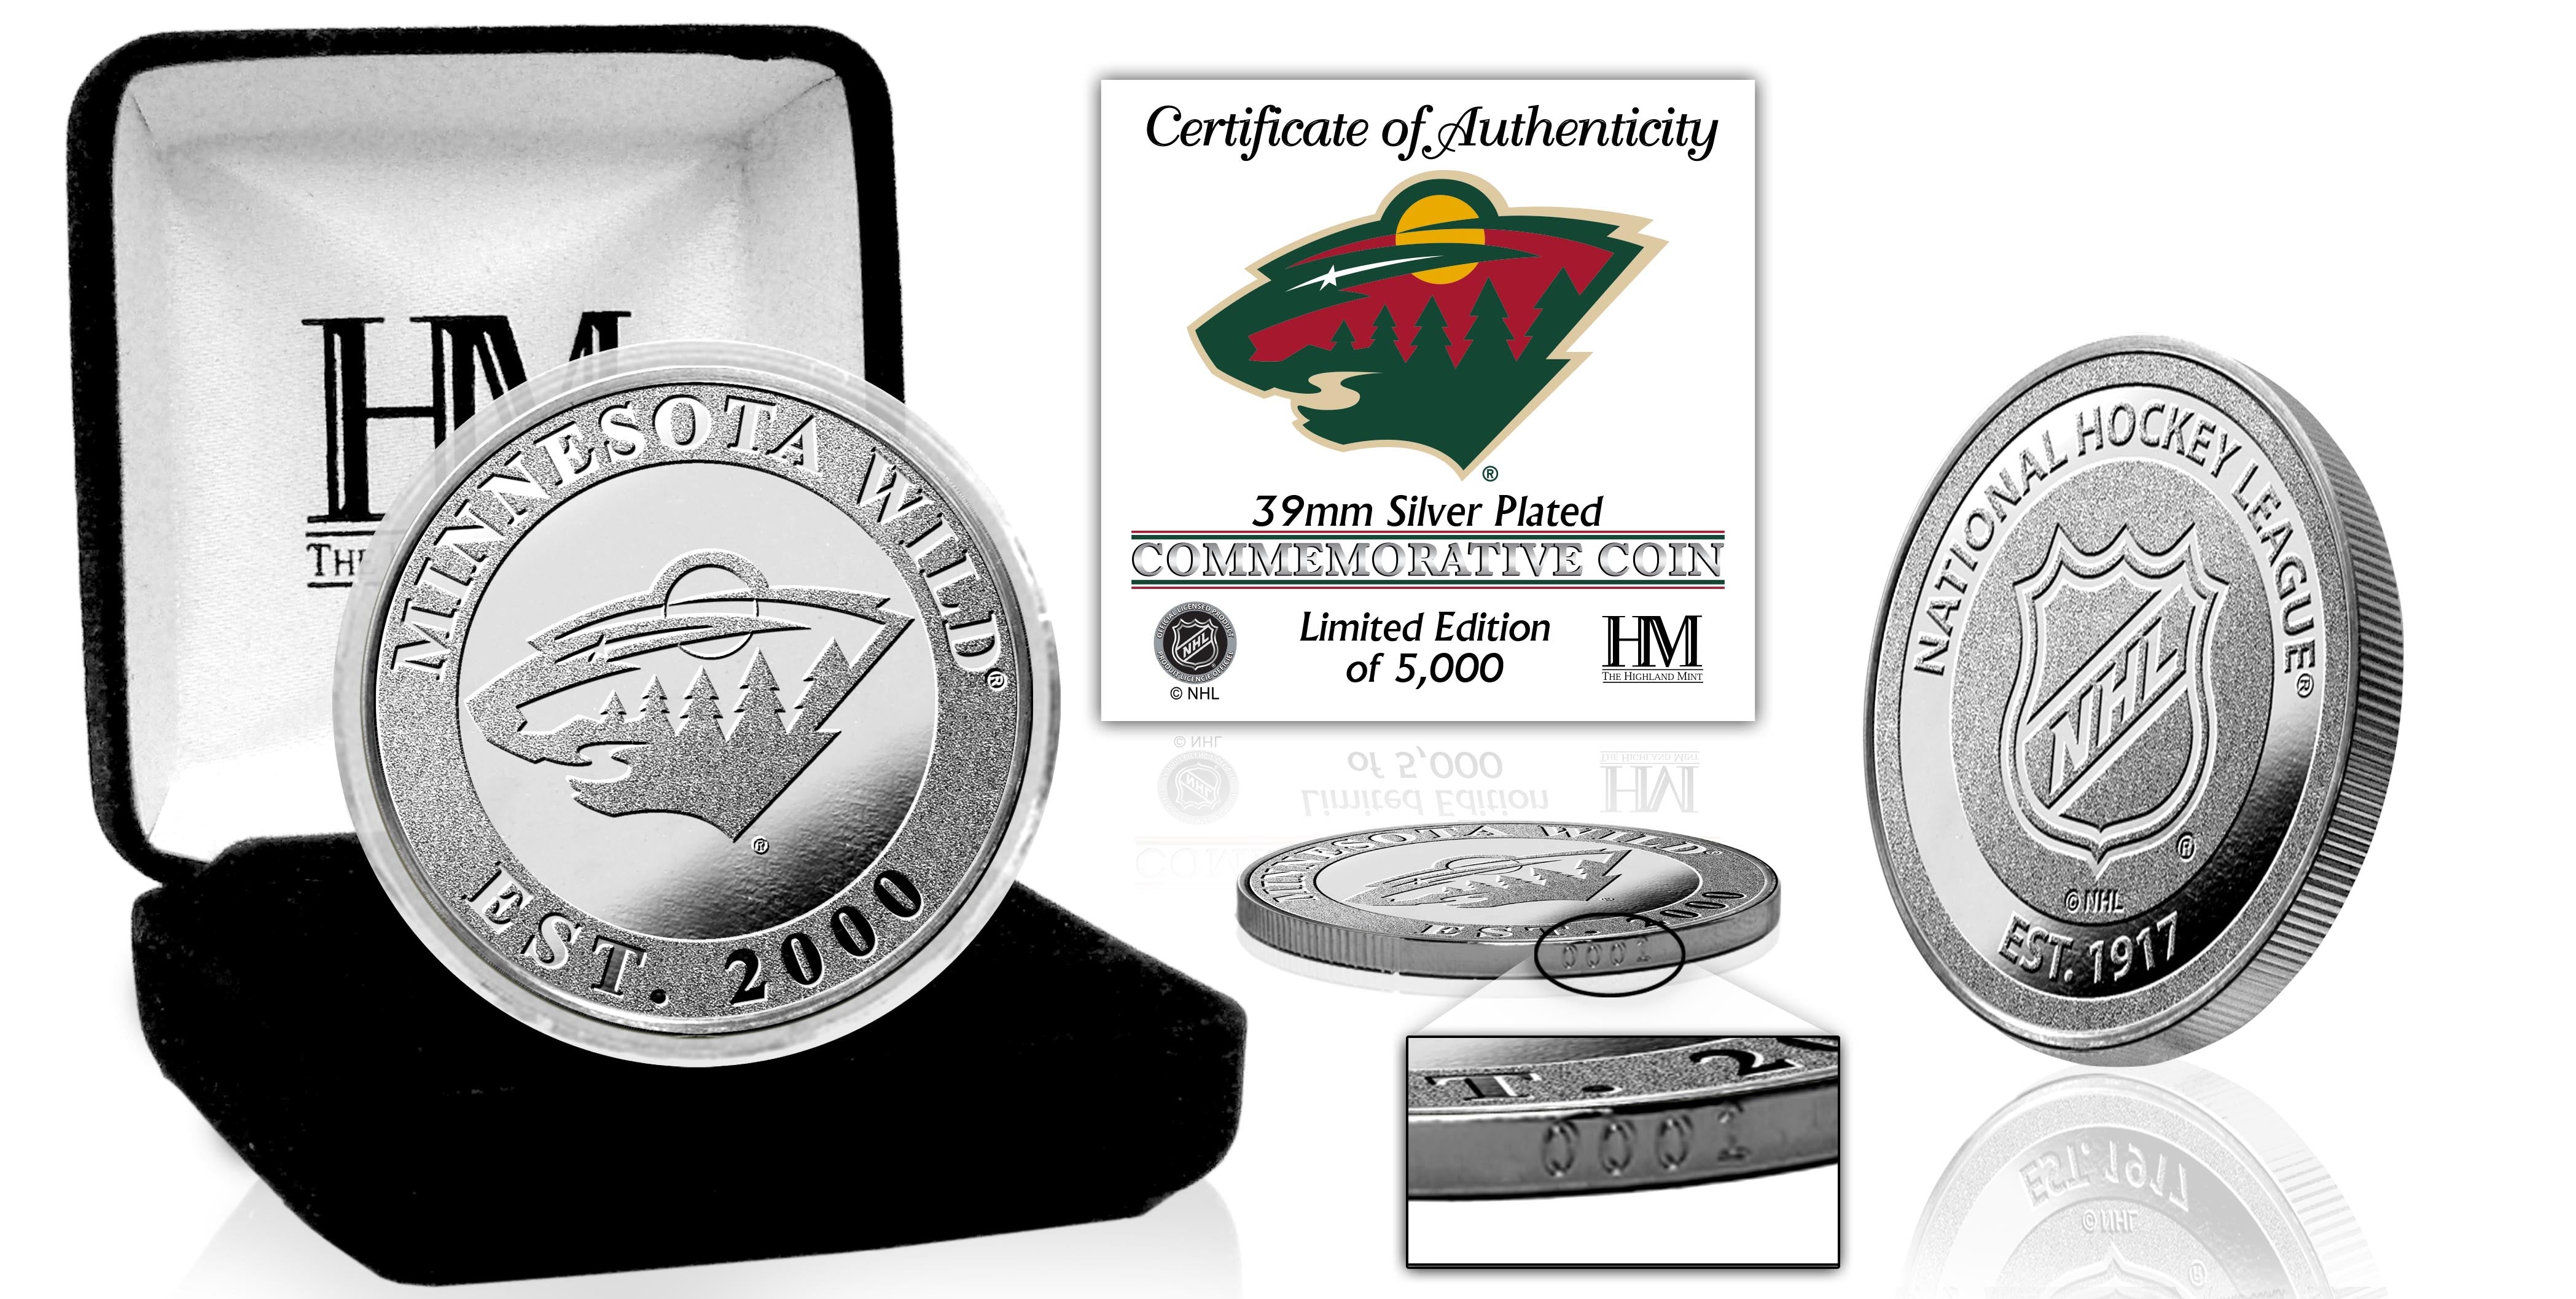 Minnesota Wild Silver Mint Coin